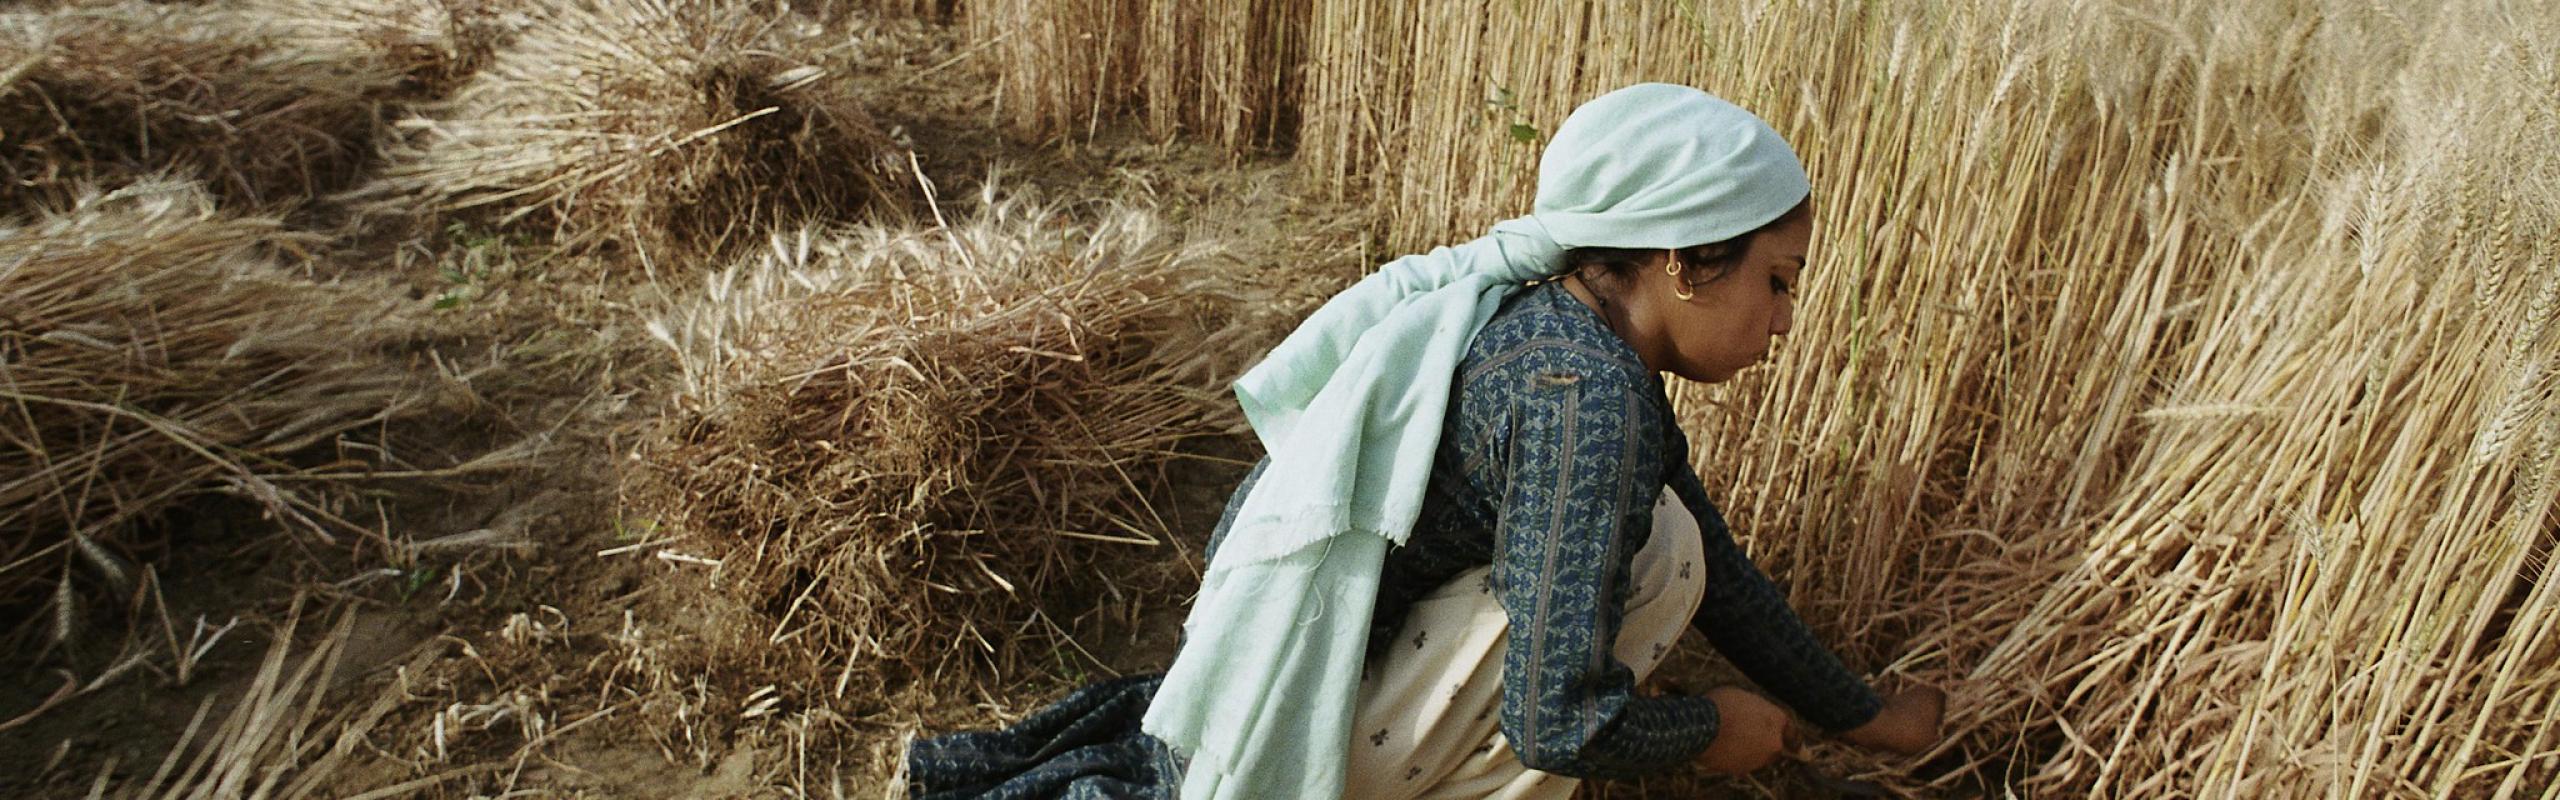 Woman farmer harvests wheat in Bangladesh